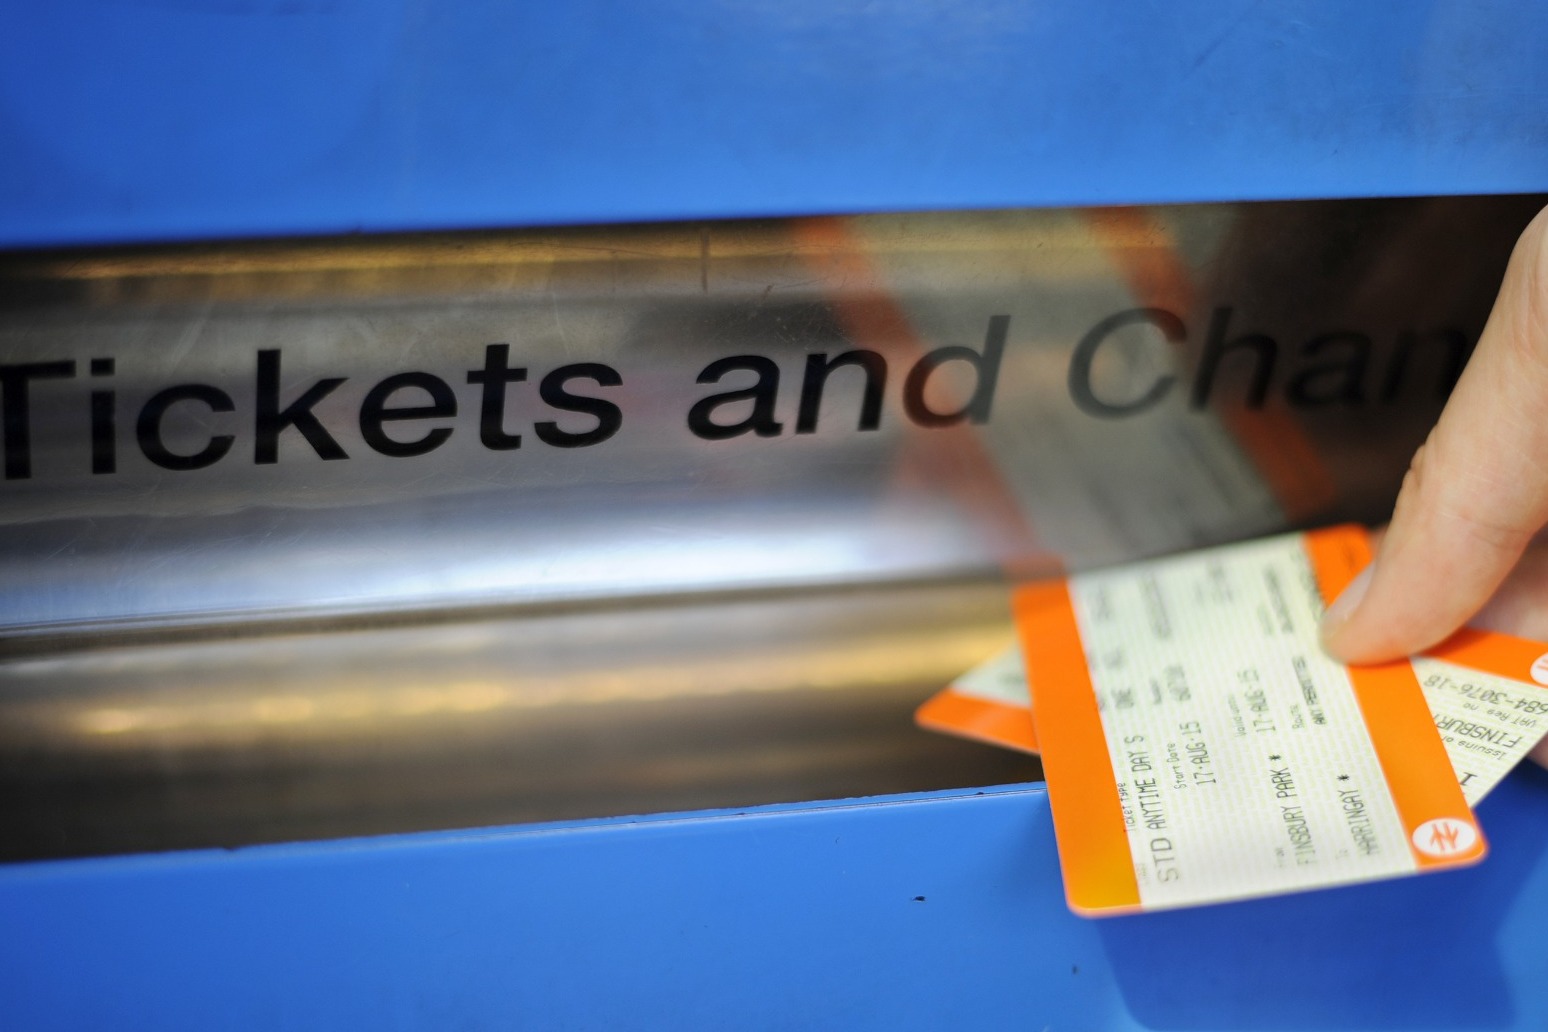 ‘Absurd’ rail ticketing system needs overhauled, charity says 